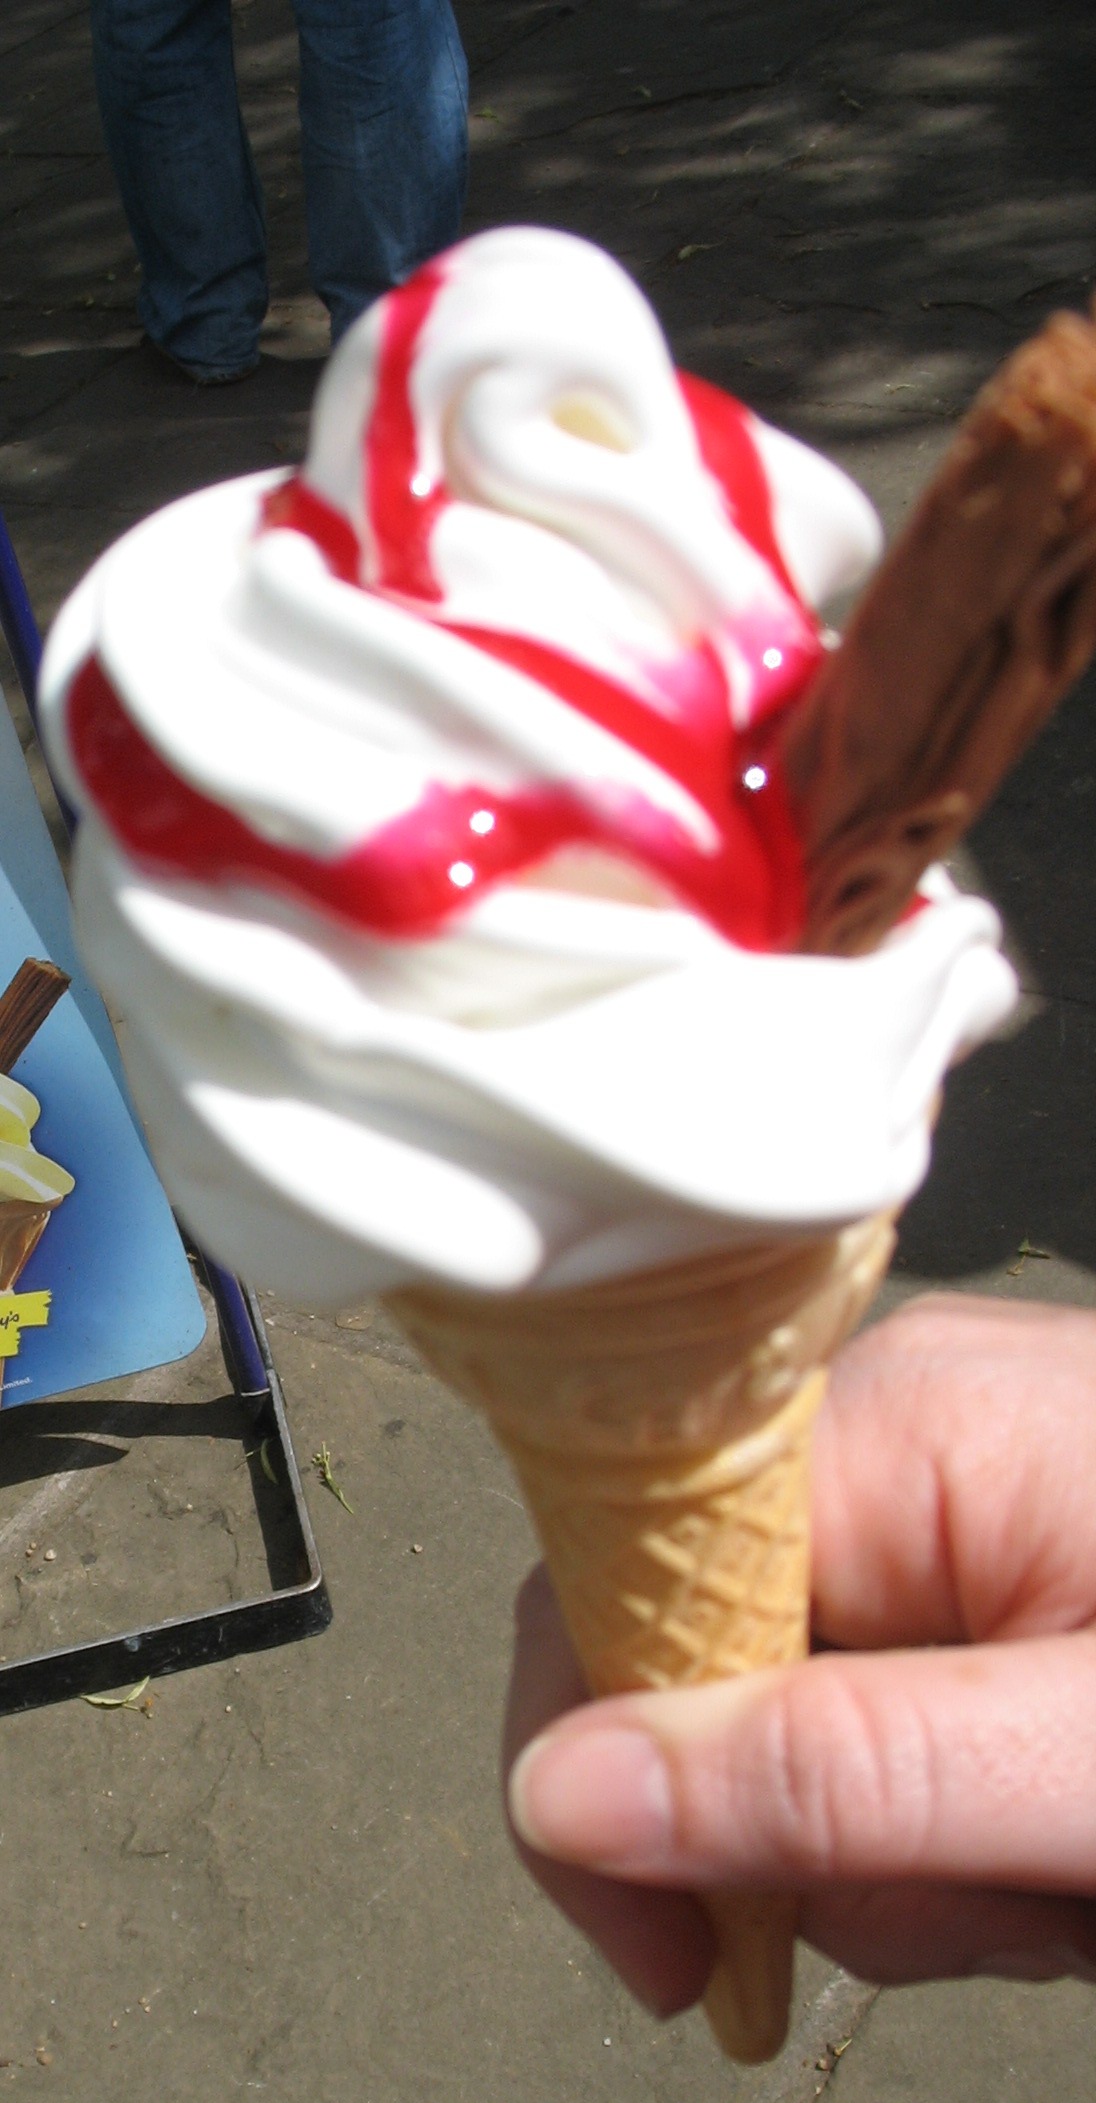 Cadbury Flake deemed too crumbly for 99 cones, say ice cream